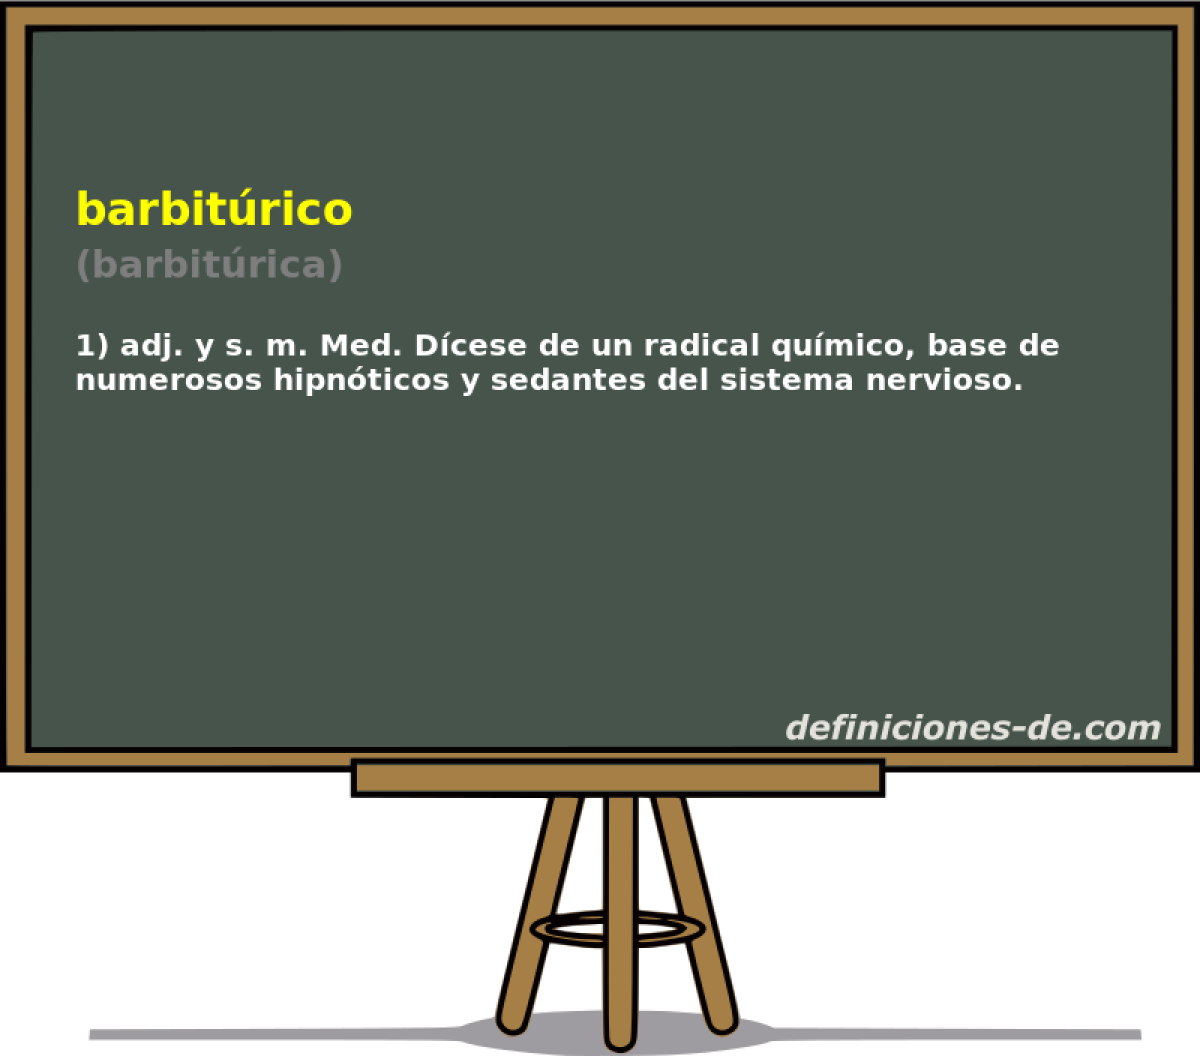 barbitrico (barbitrica)